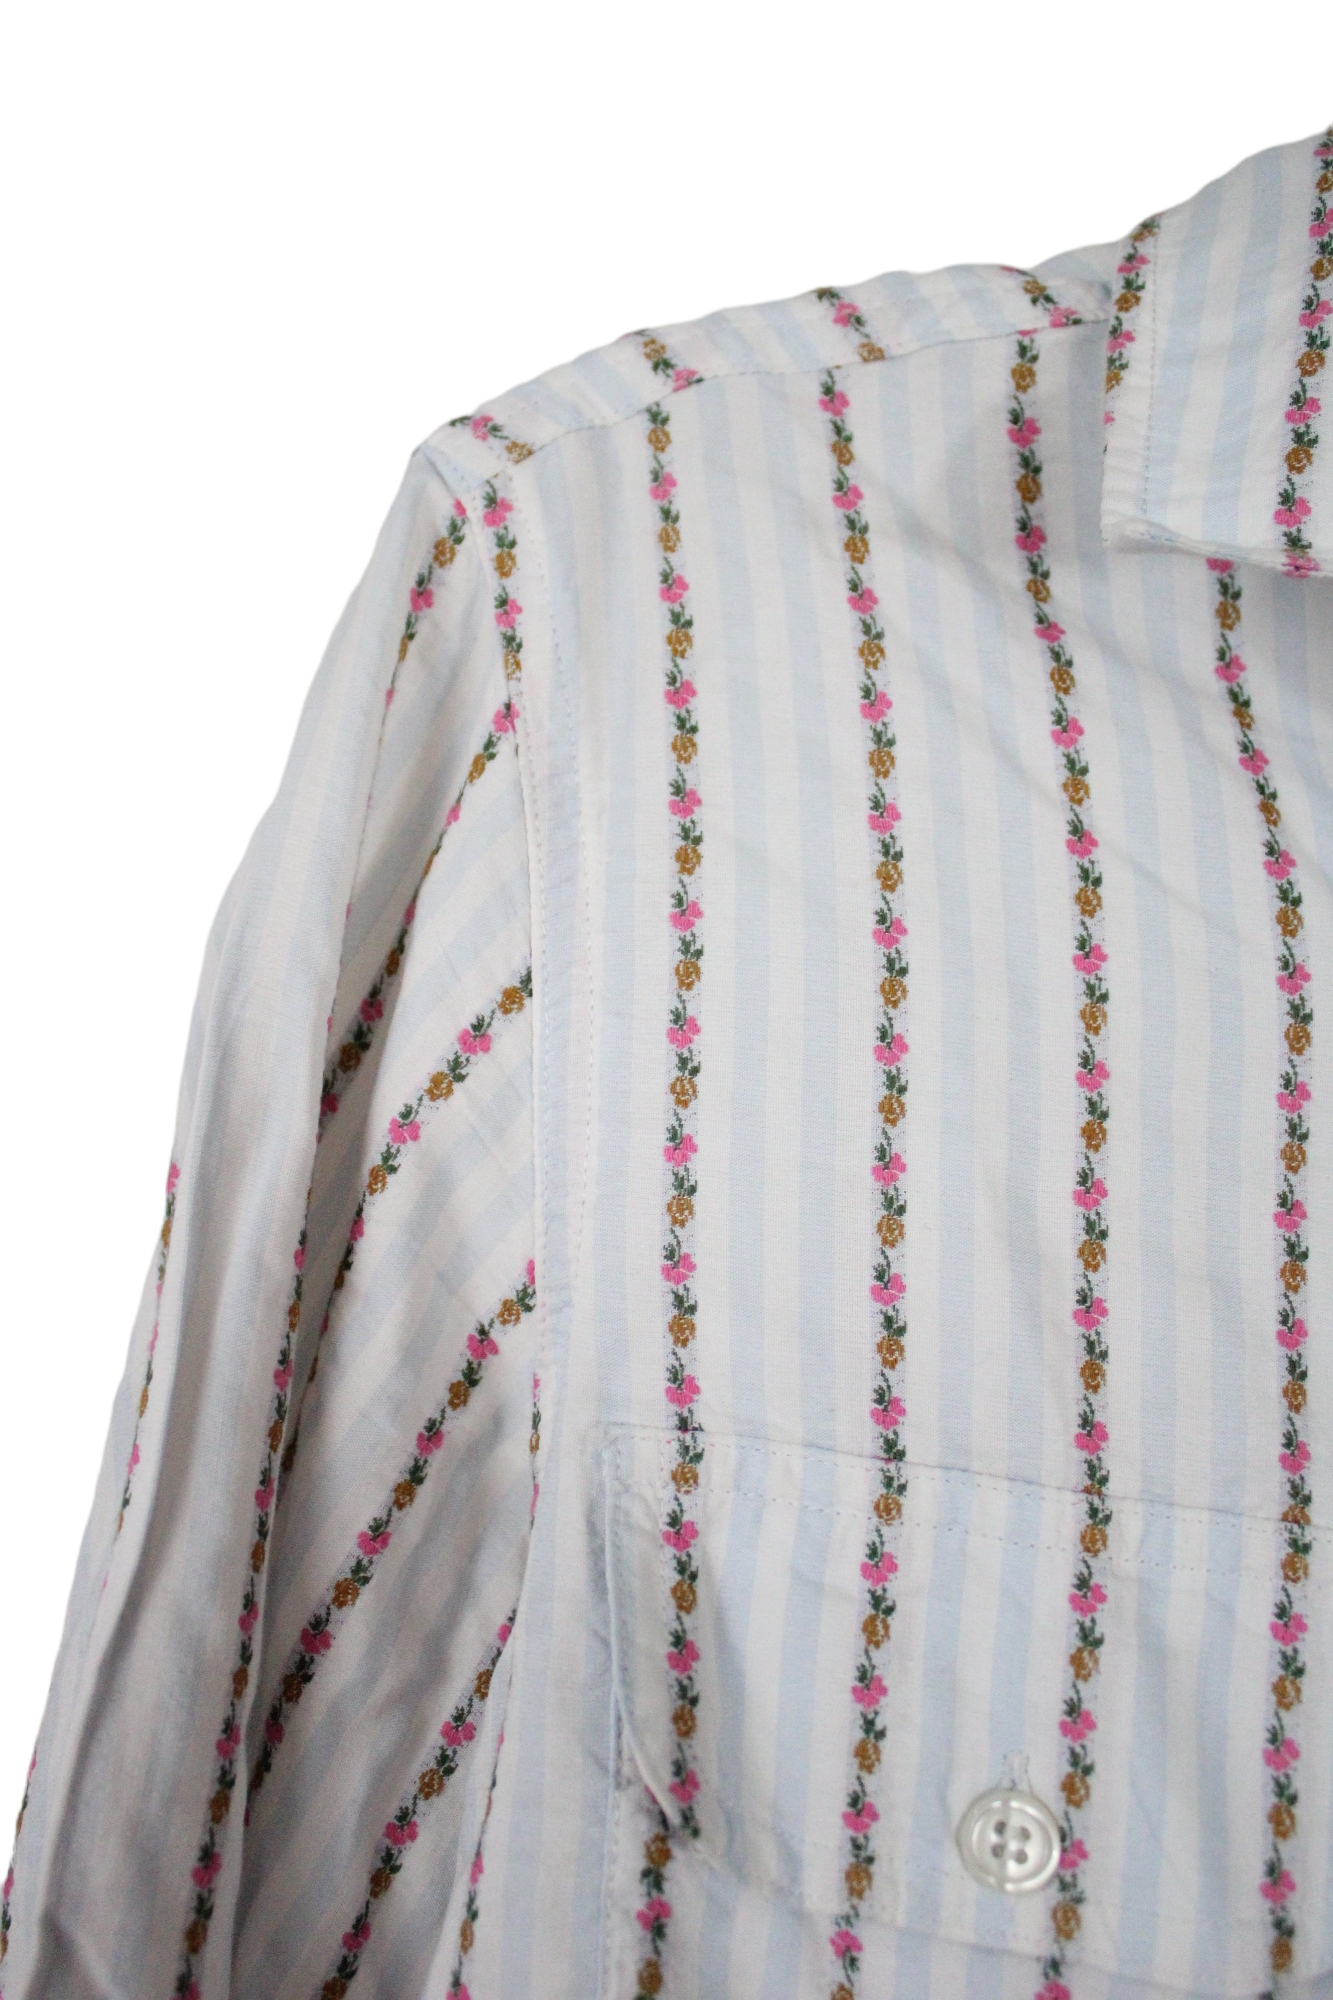 For Joseph Floral Striped Shirt | L